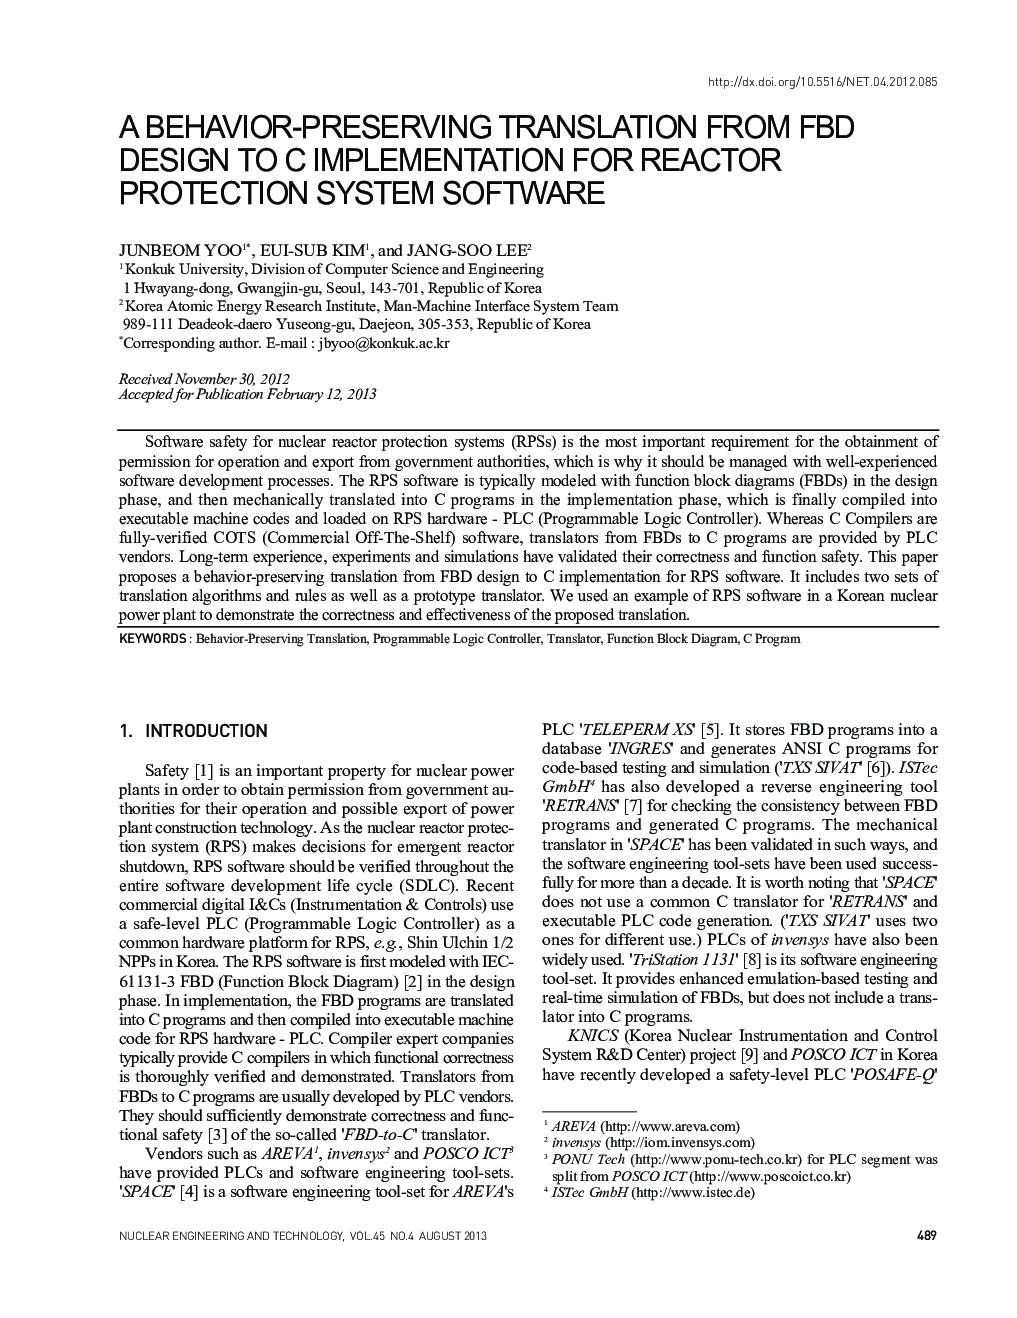 A BEHAVIOR-PRESERVING TRANSLATION FROM FBD DESIGN TO C IMPLEMENTATION FOR REACTOR PROTECTION SYSTEM SOFTWARE